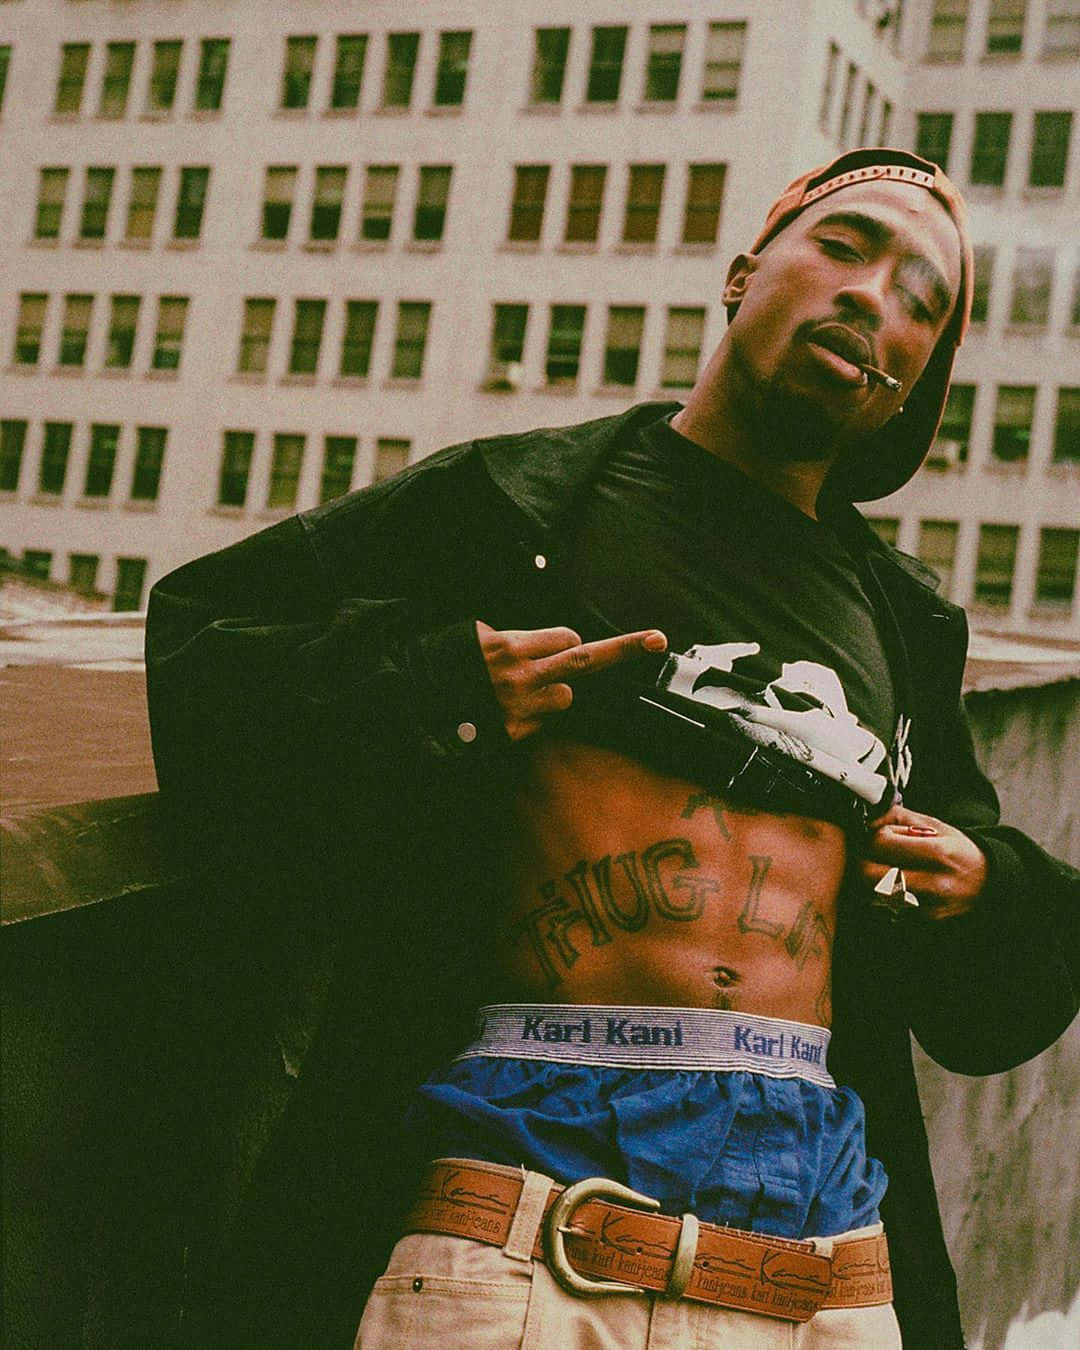 Tupac Shakur – Legendary Hip Hop Artist